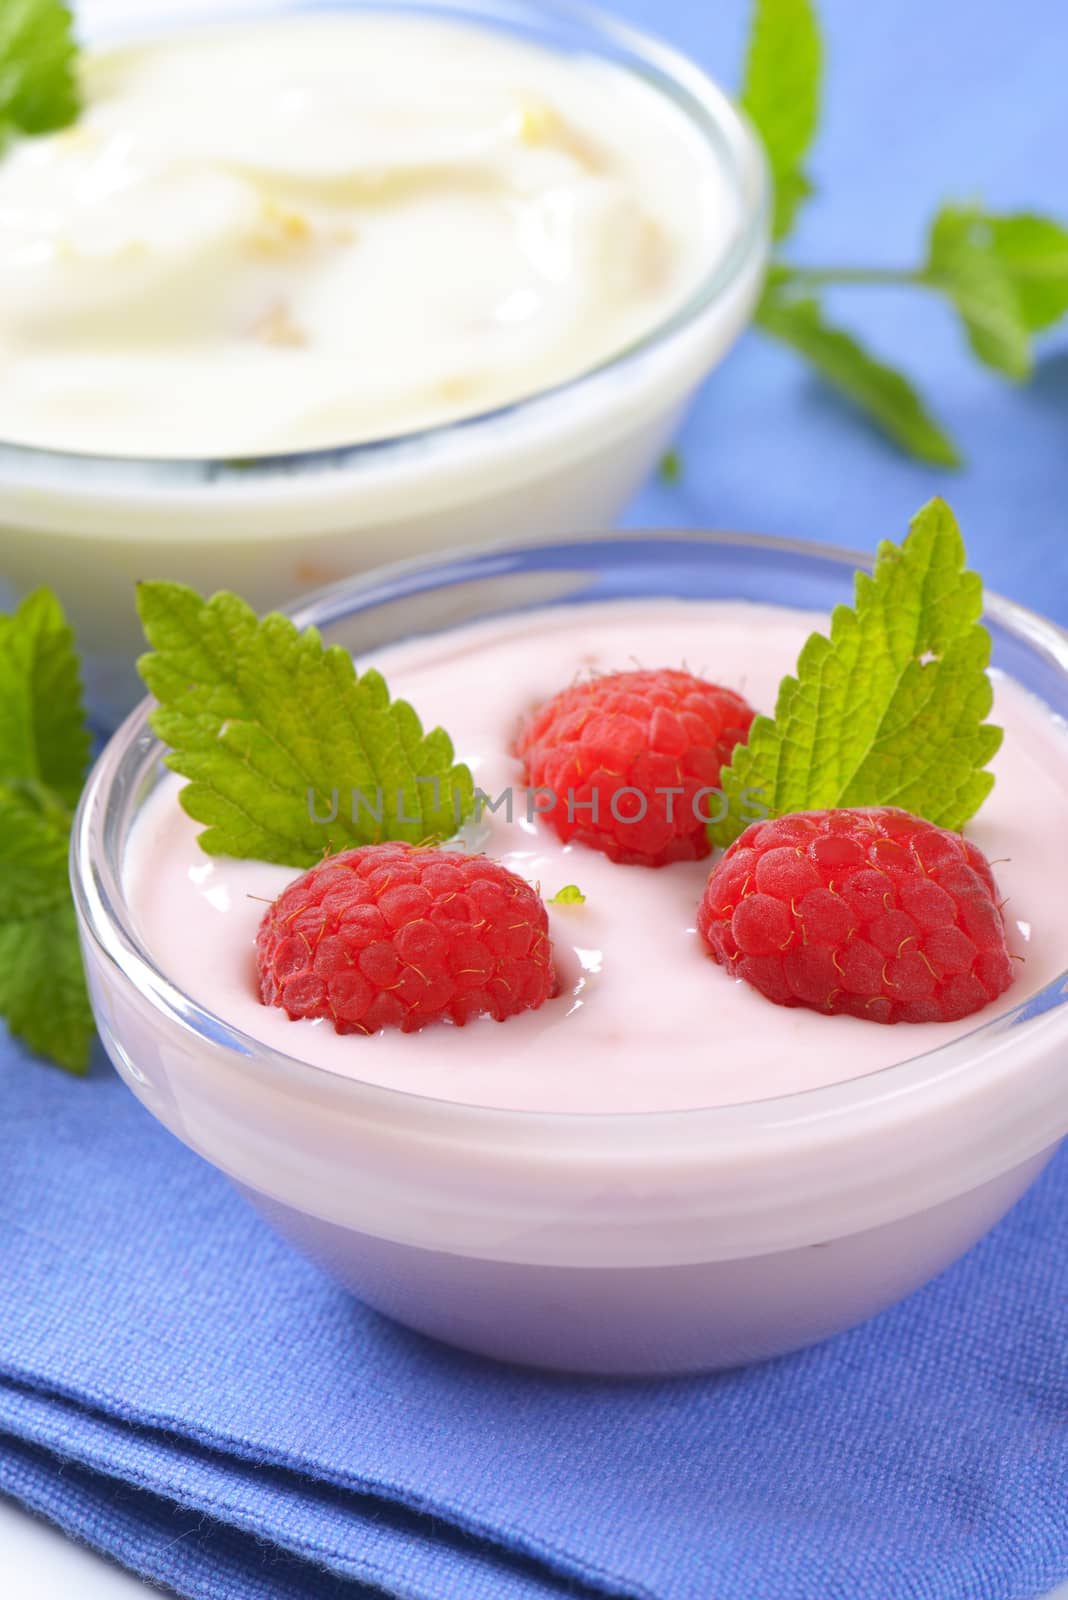 bowls of fruit yogurt by Digifoodstock